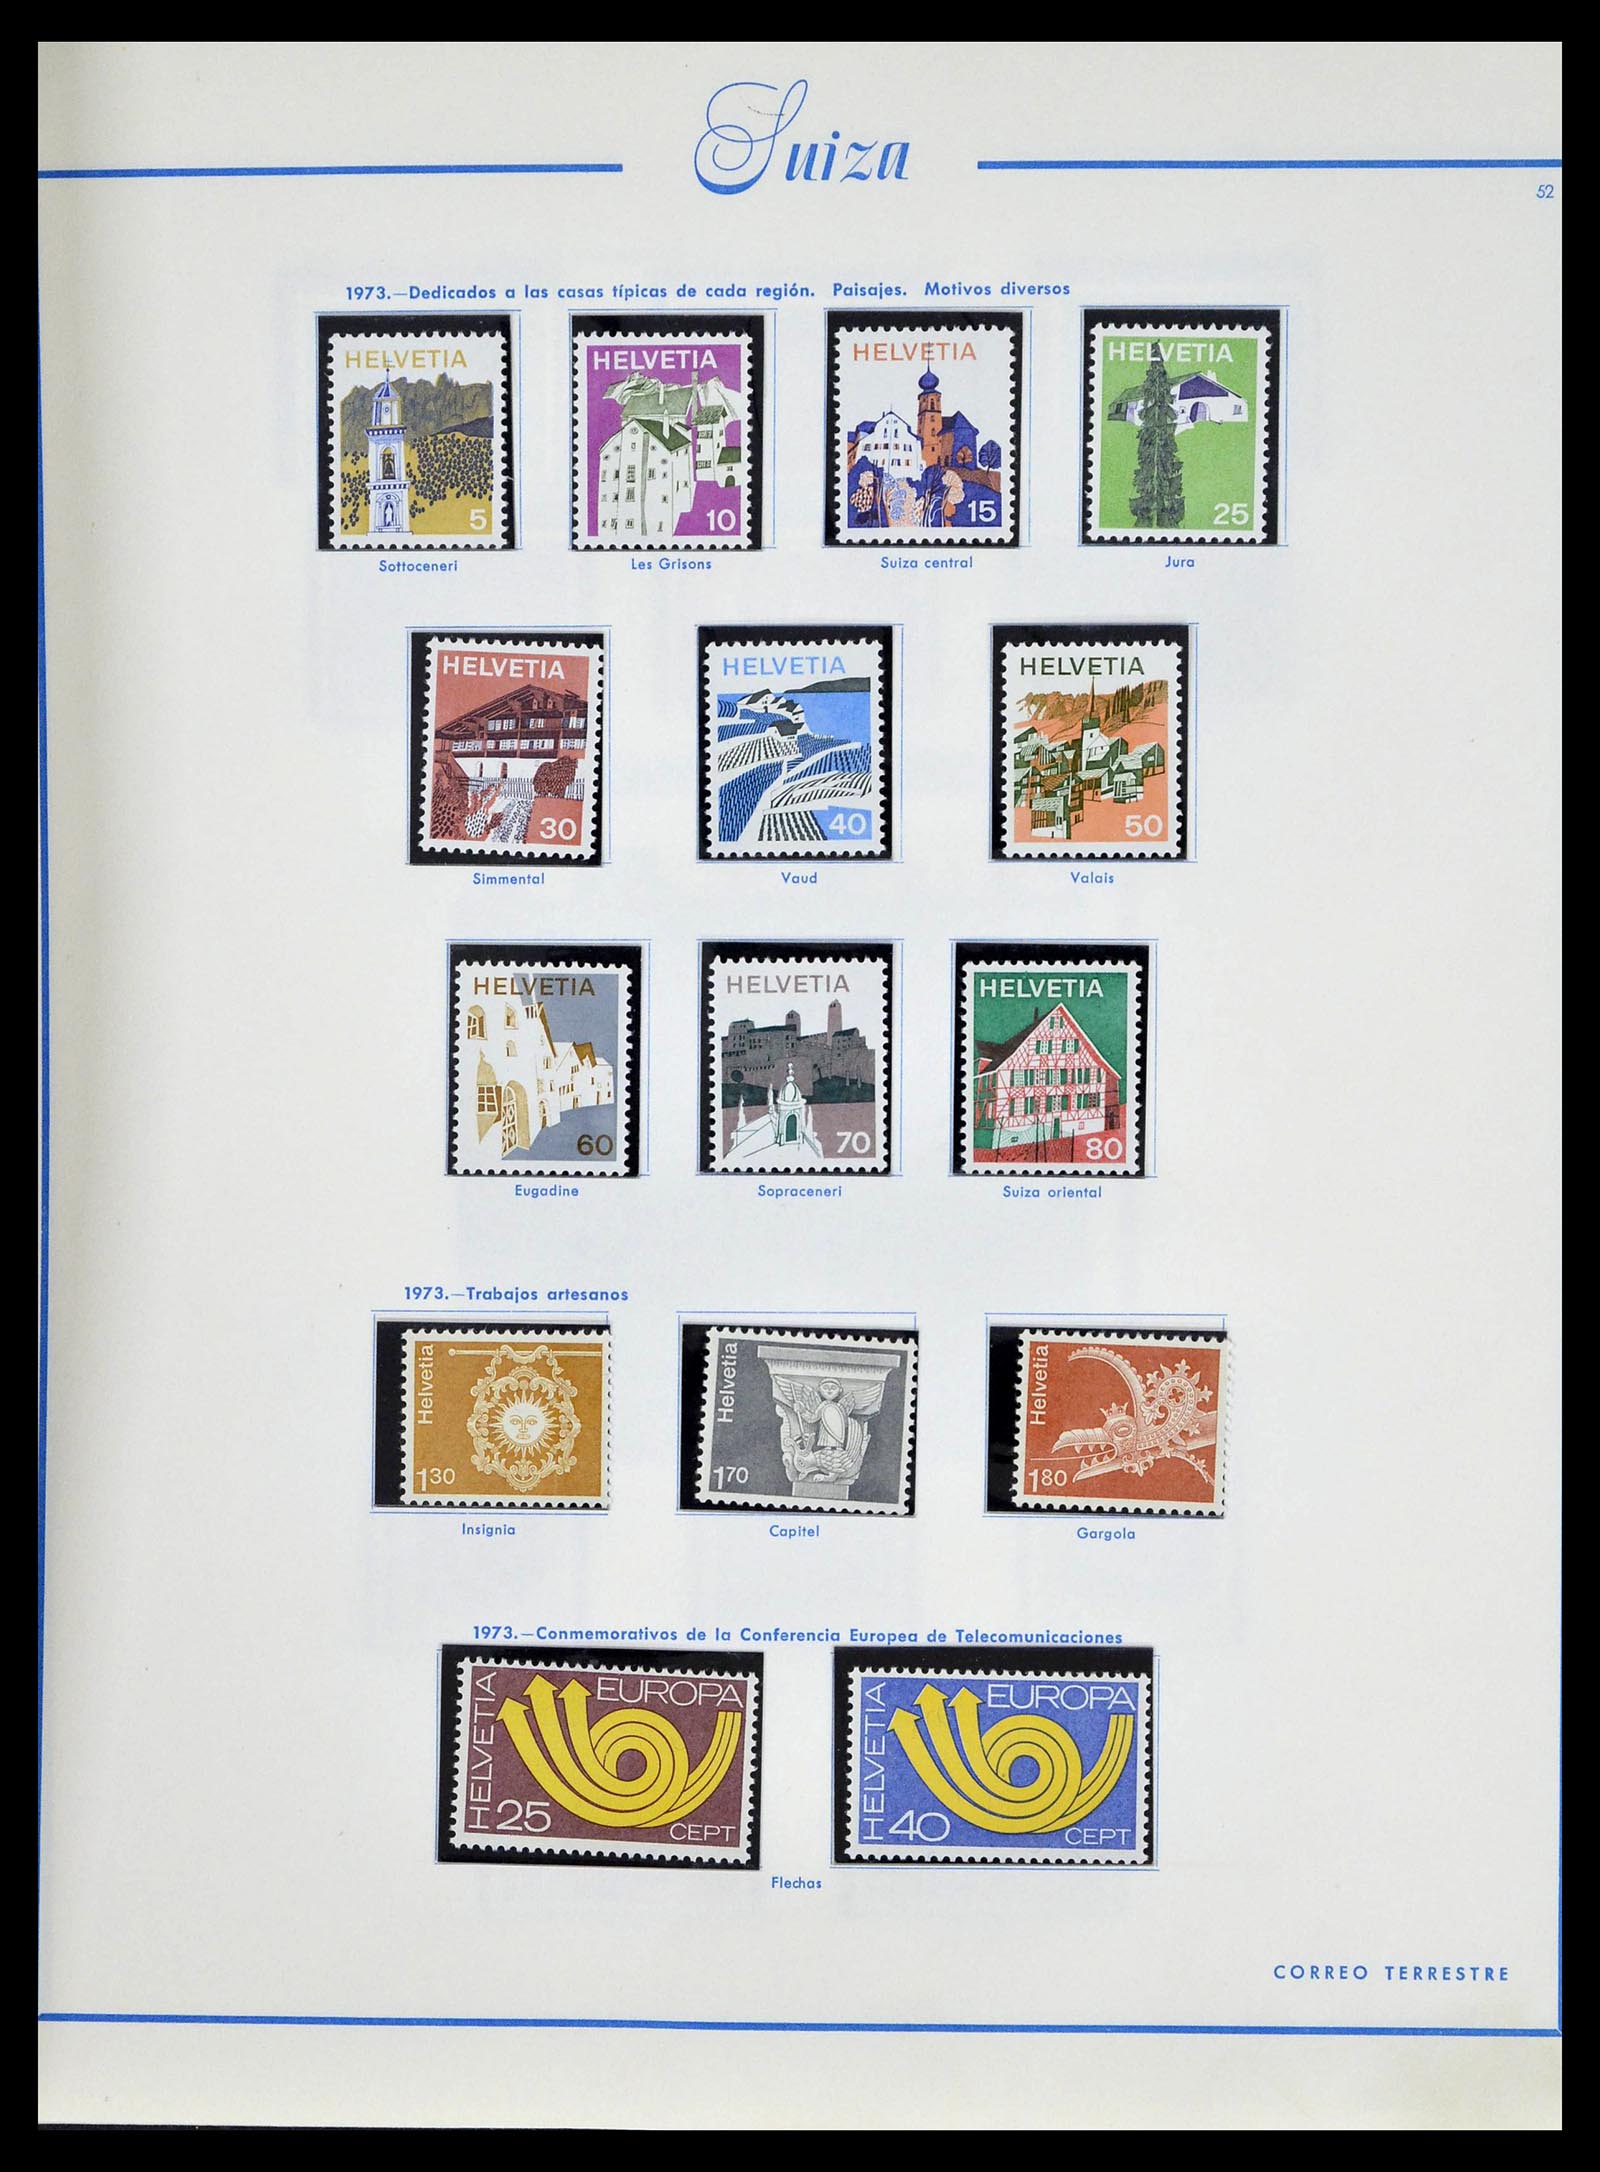 39217 0057 - Stamp collection 39217 Switzerland 1850-1986.